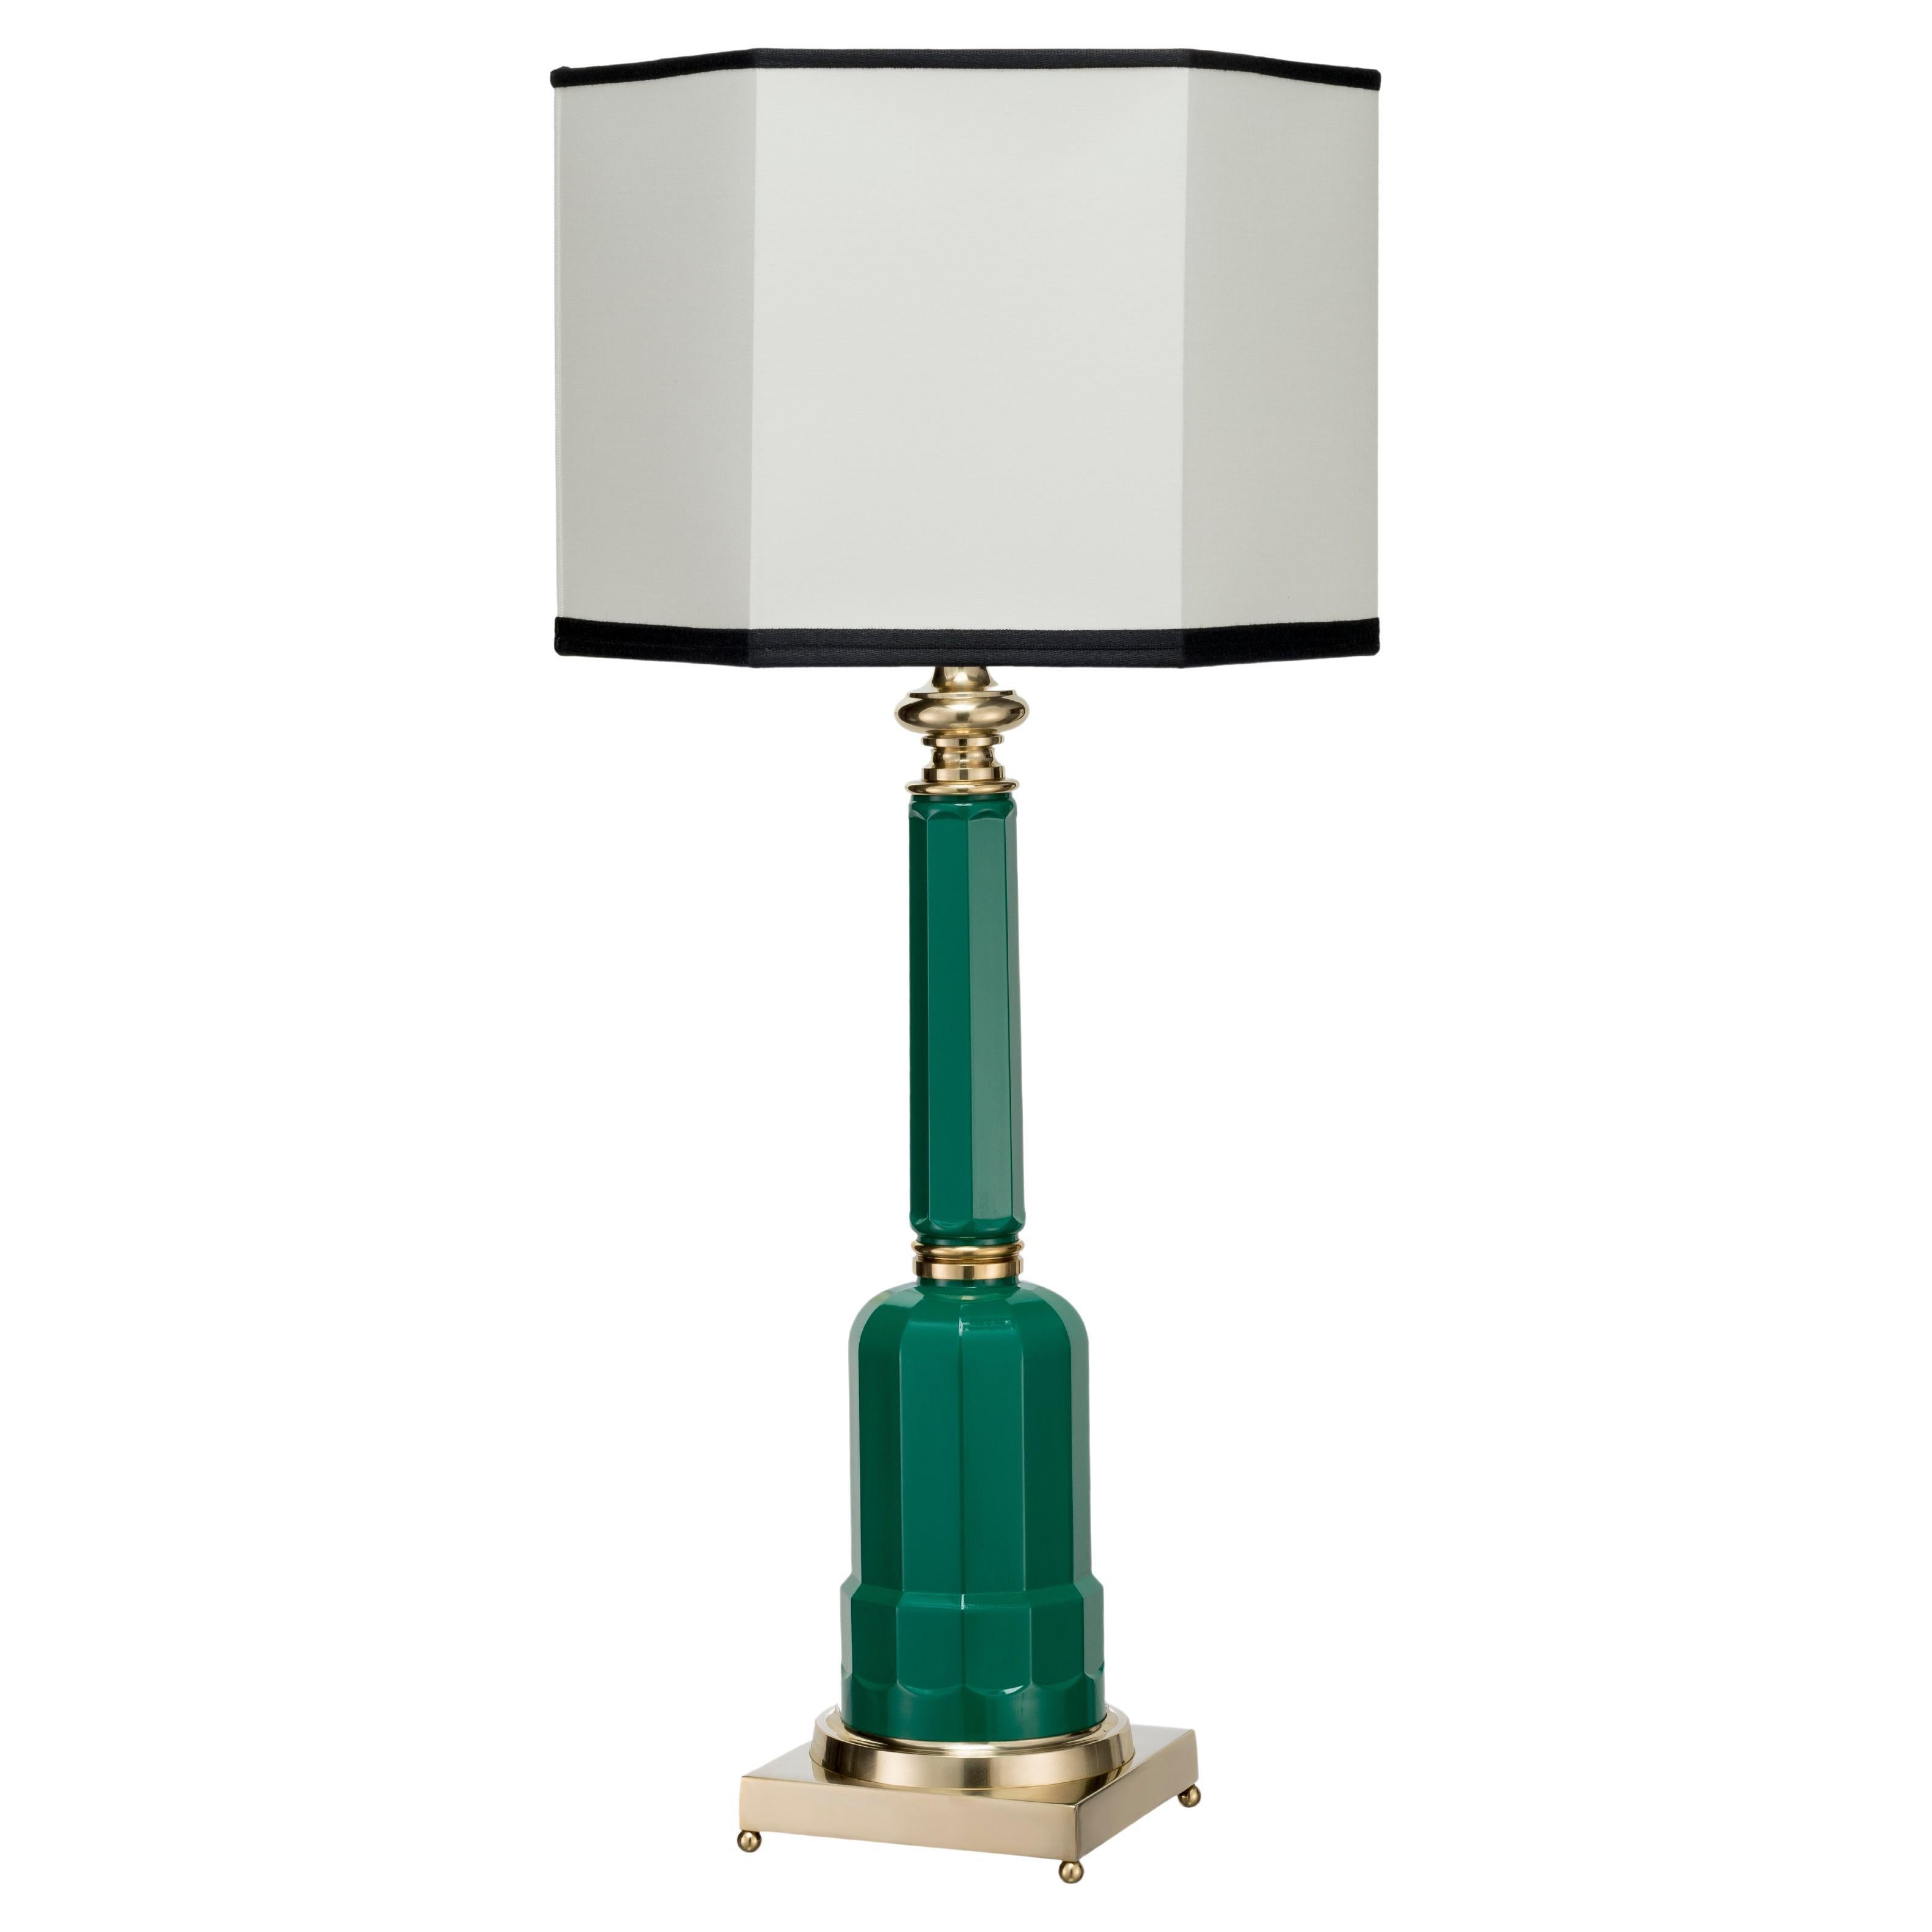 Jacaranda turquoise green table lamp